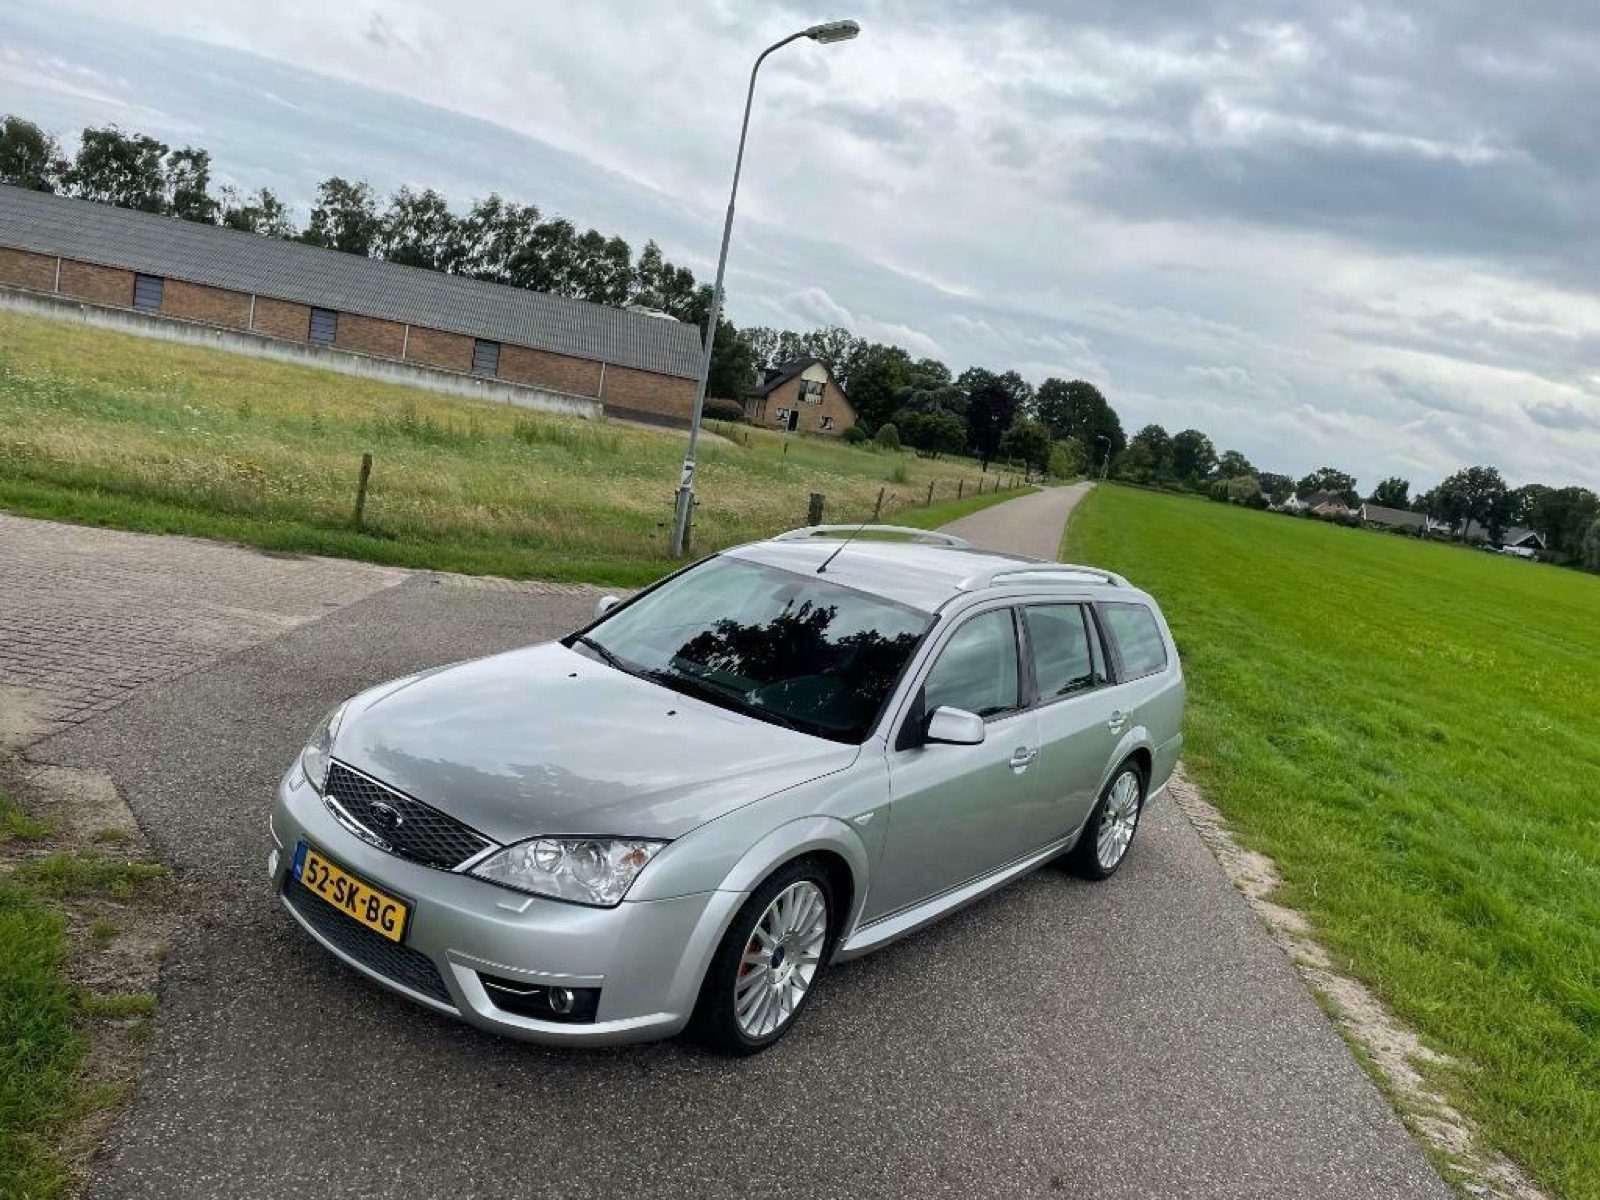 Correct ~ kant Stiptheid Mondeo ST220 Wagon is ideale tweede auto - Autoblog.nl